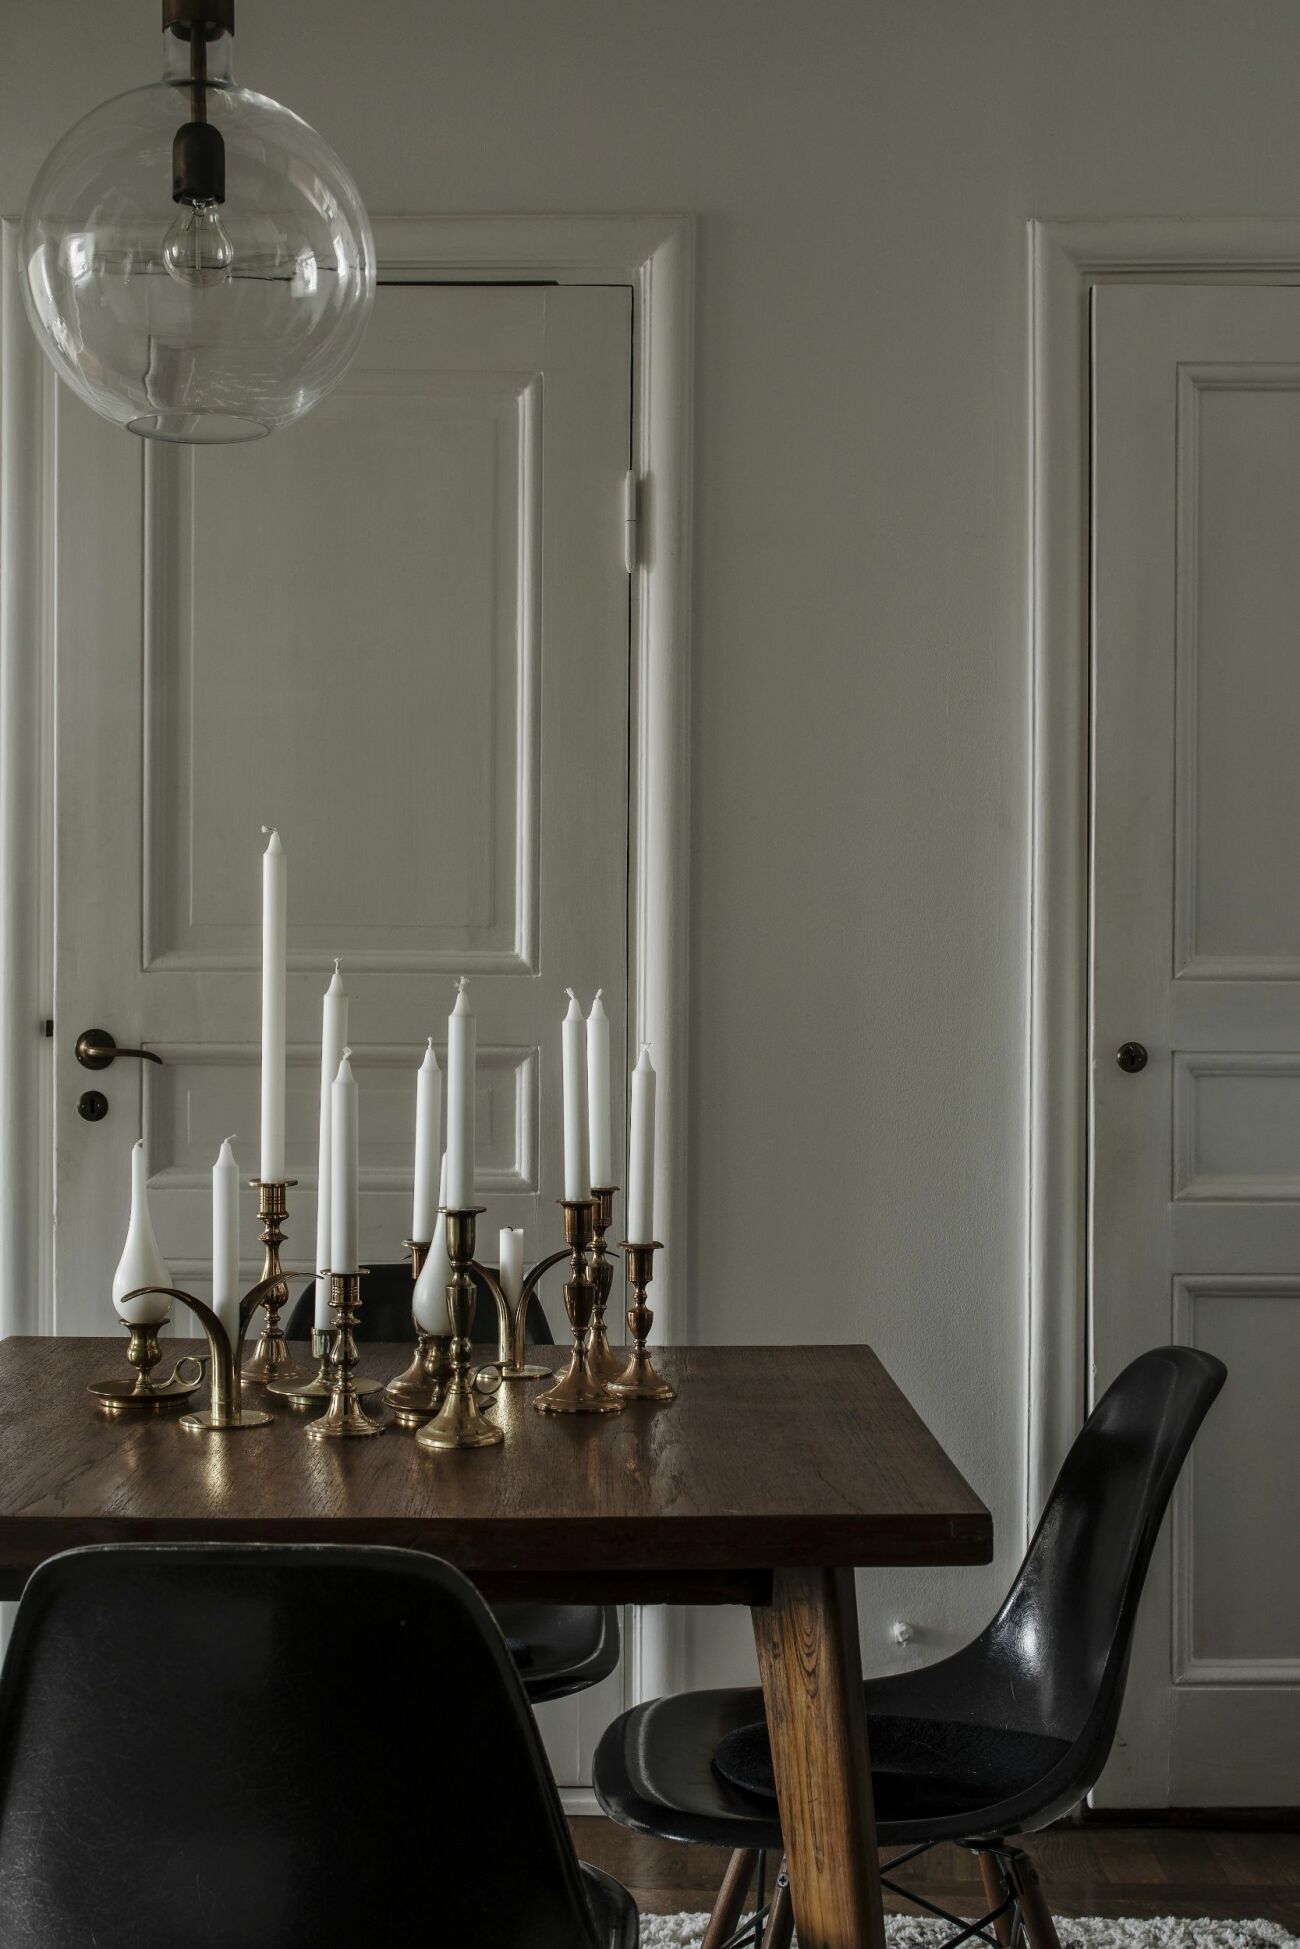 Eamesstolar runt matbord av den franska designern Pierre Jeanneret från Galerie maison premiere